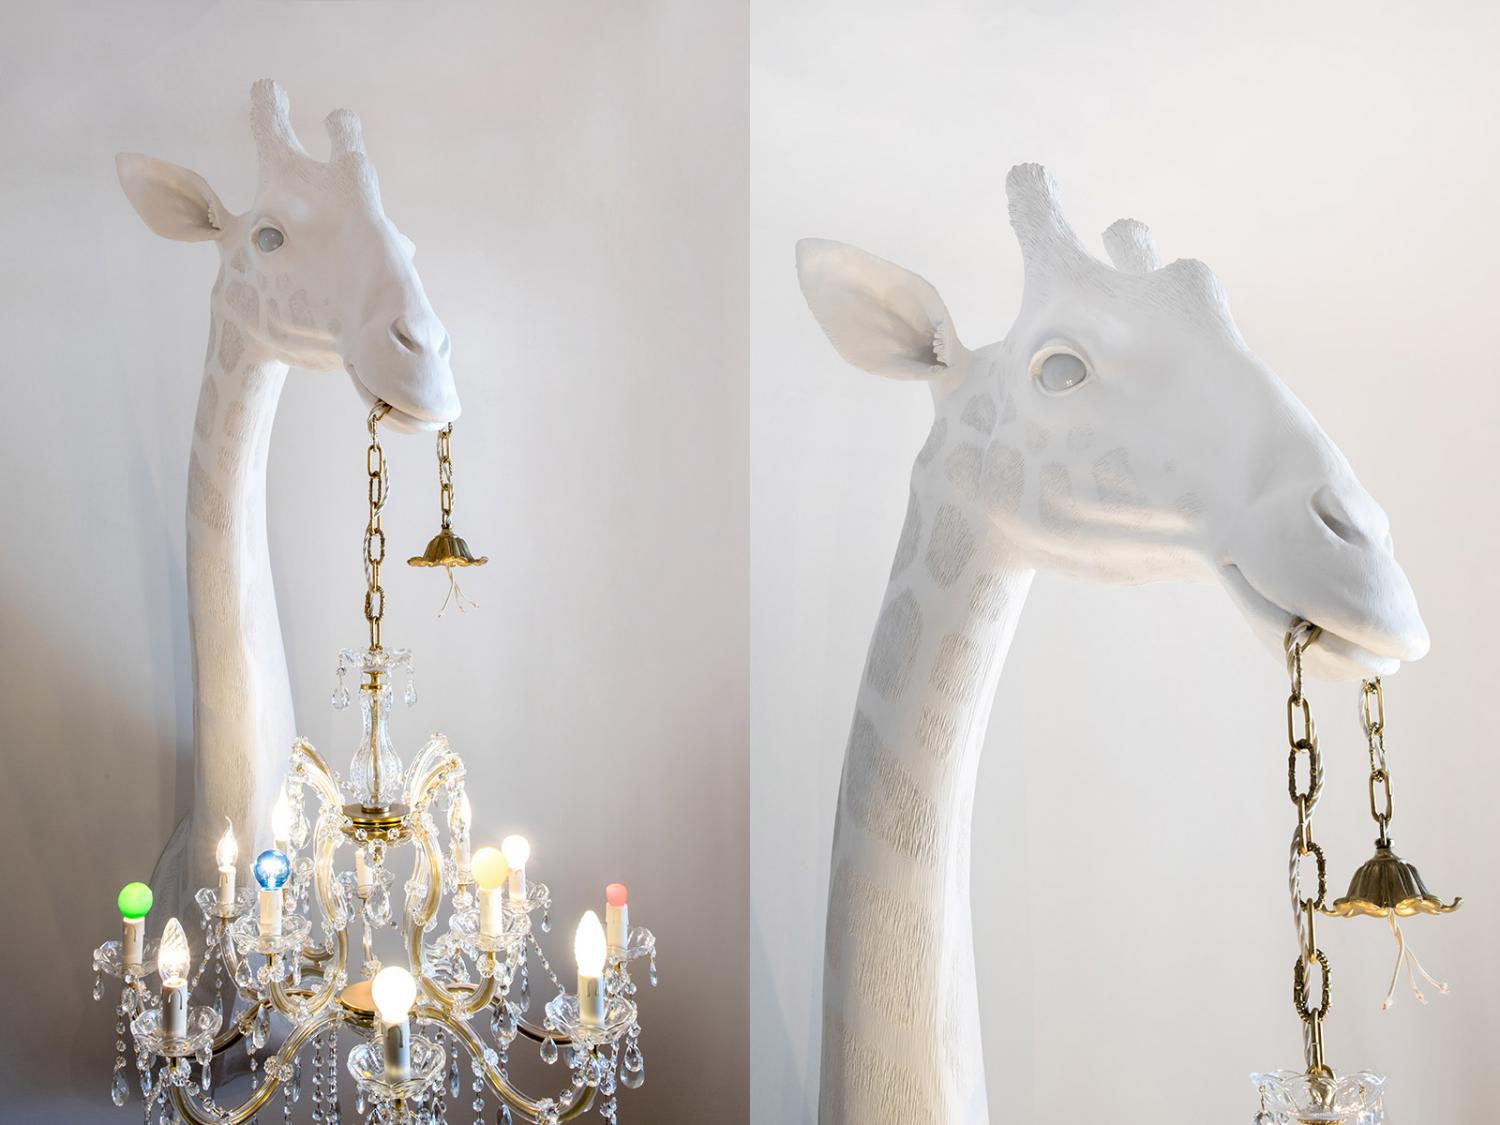 Giant Giraffe Chandelier - Wall mounted giraffe lamp